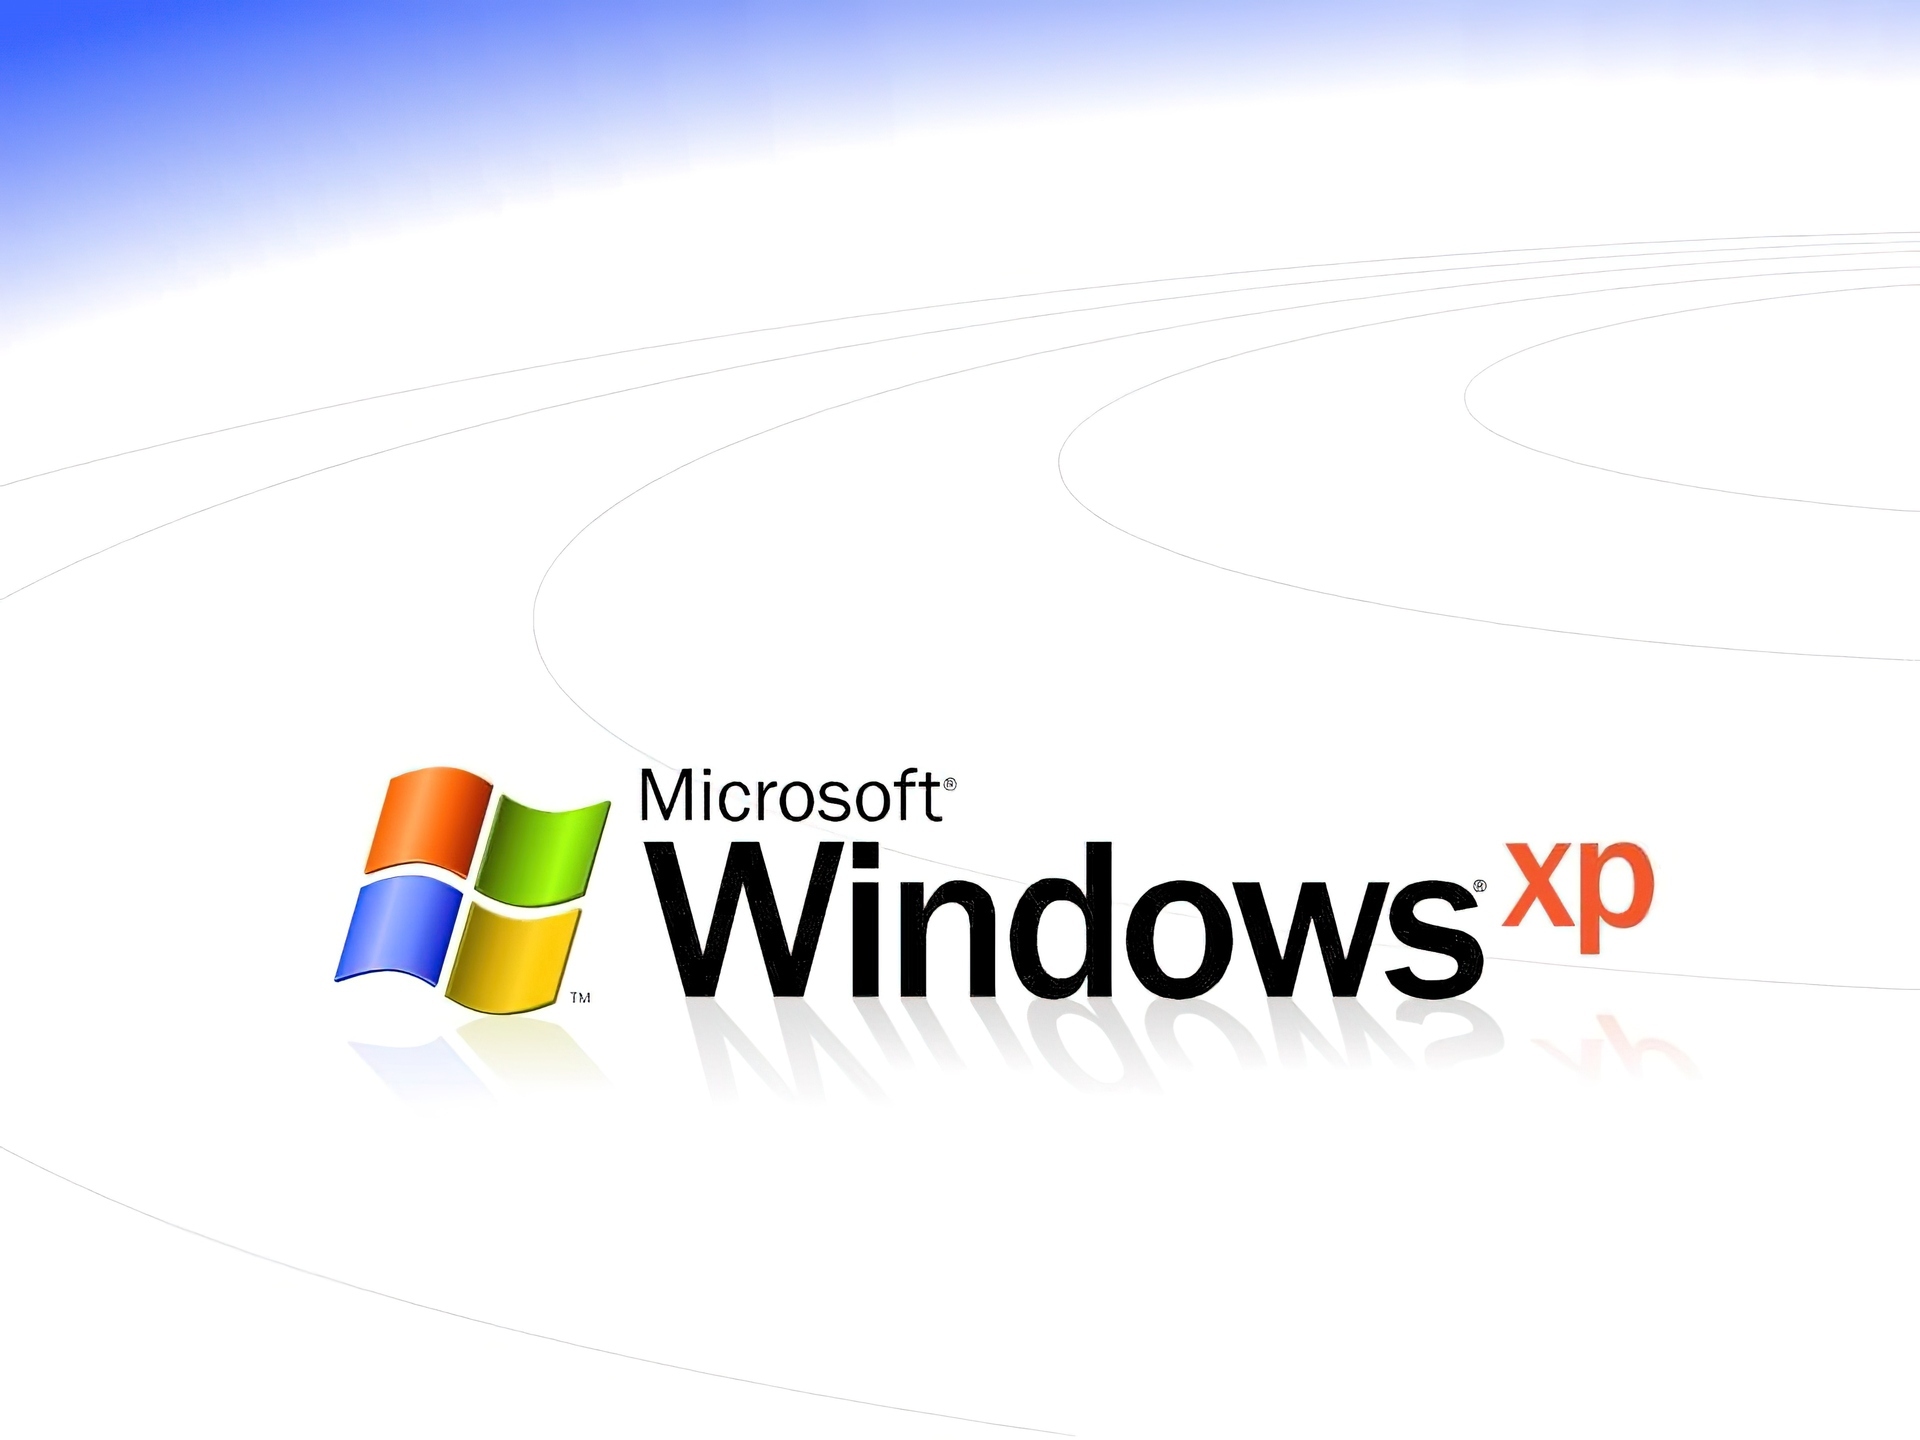 Микро windows. Microsoft ОС Windows XP. Логотип Windows. Эмблема Windows XP. Логотип Microsoft Windows XP.